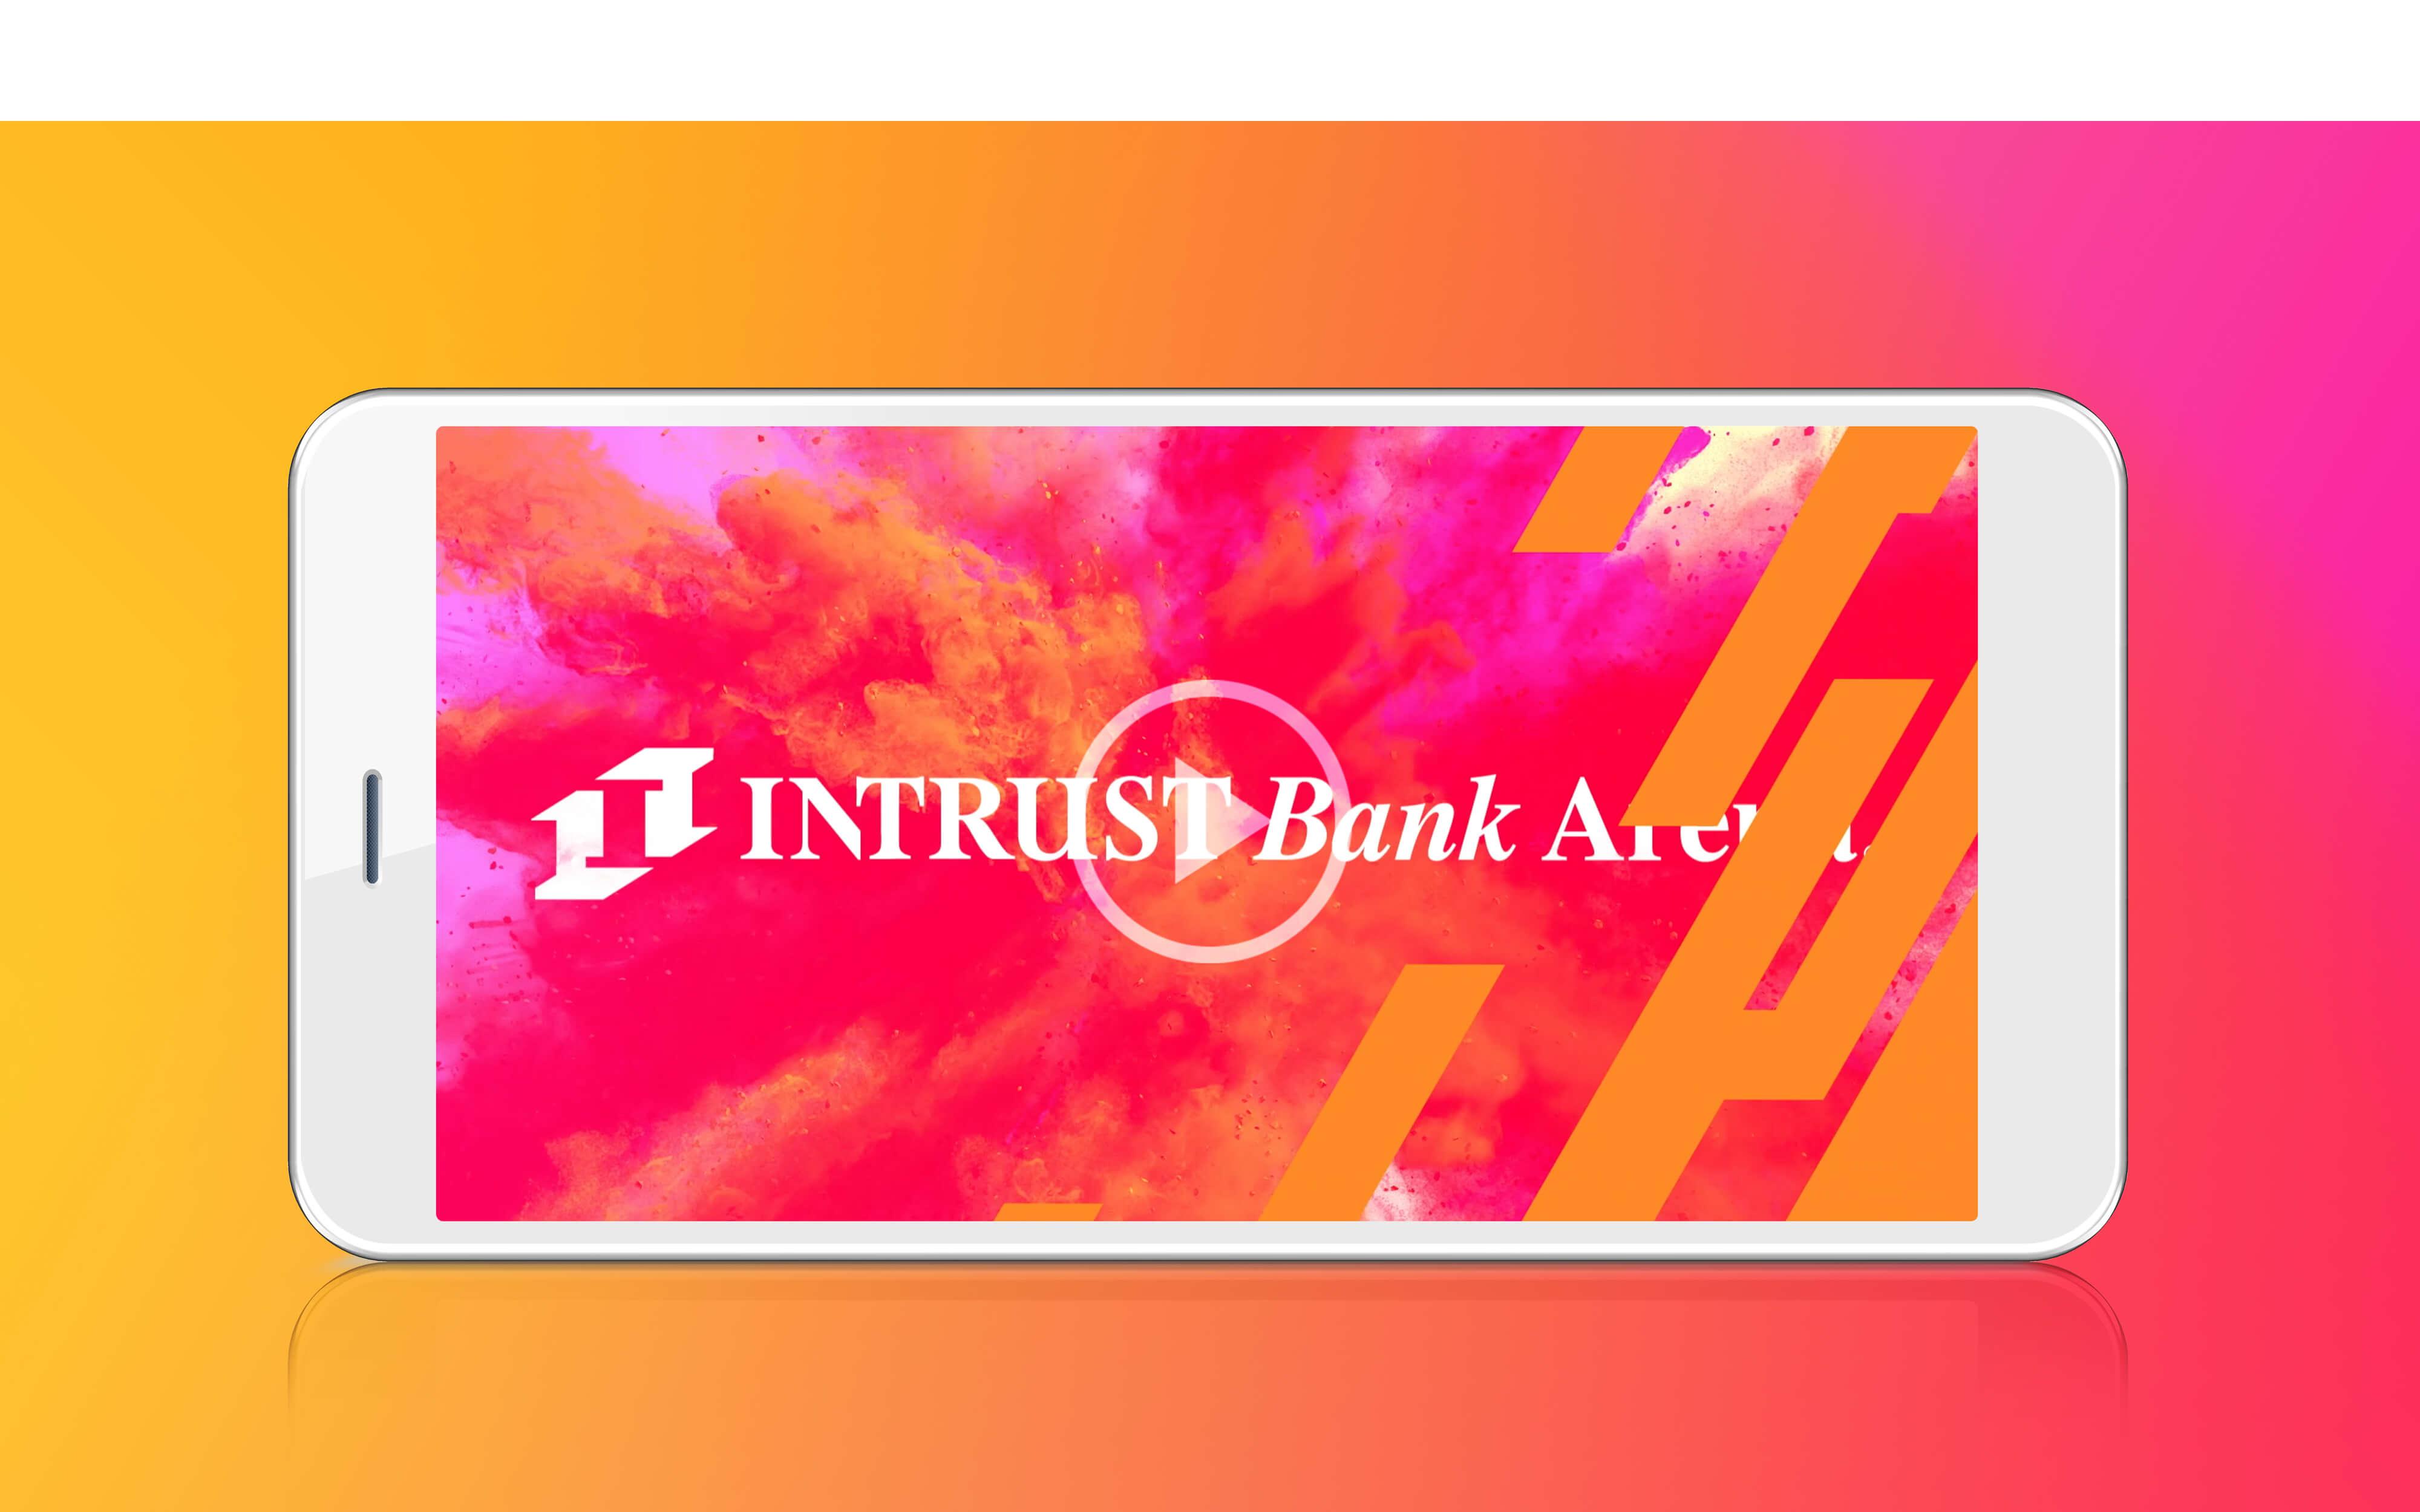 Intrust Bank Arena video prestart image